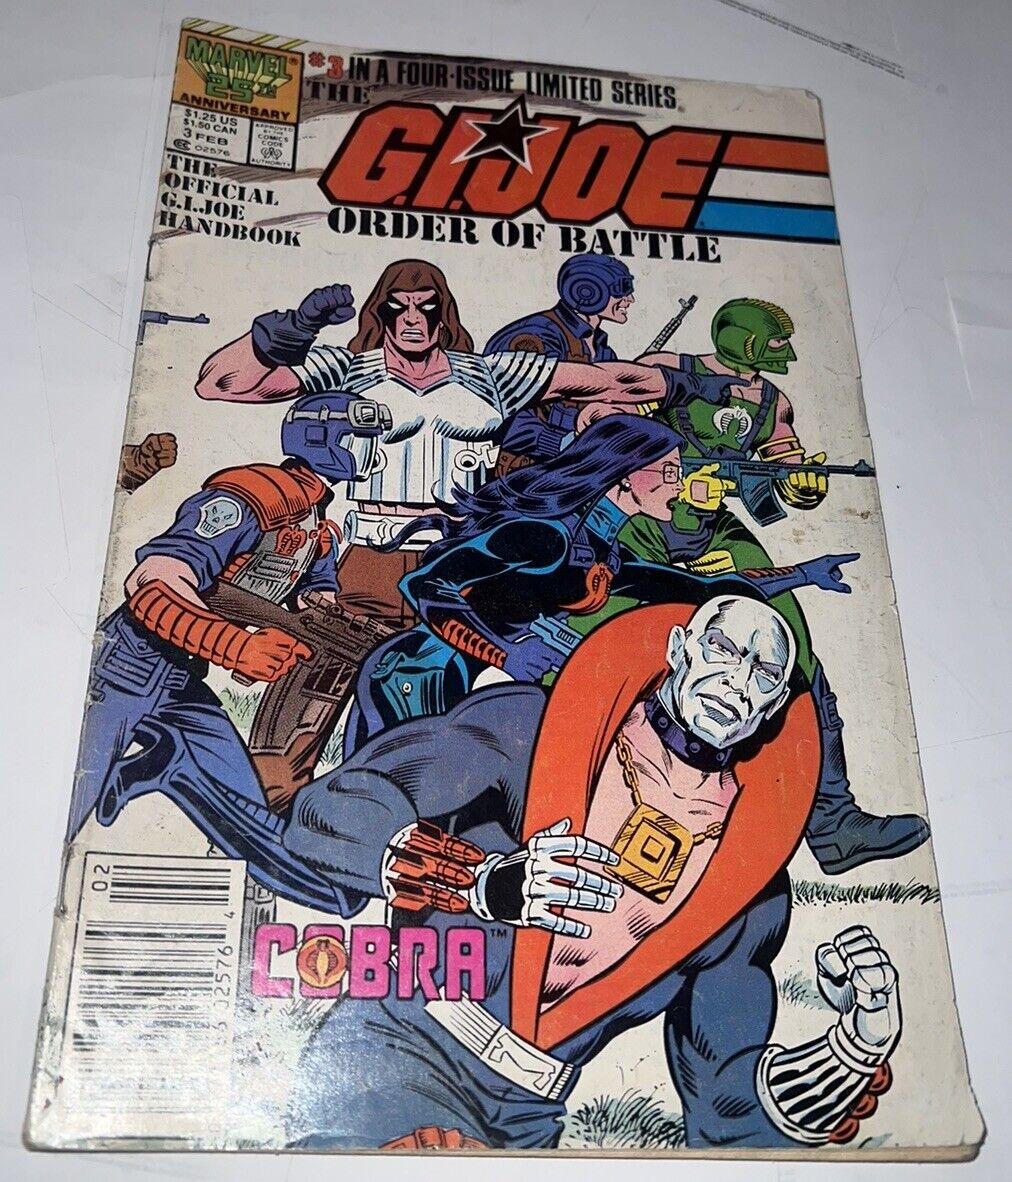 GI Joe Order of Battle #3 Comic Book February 1987 Marvel Comics